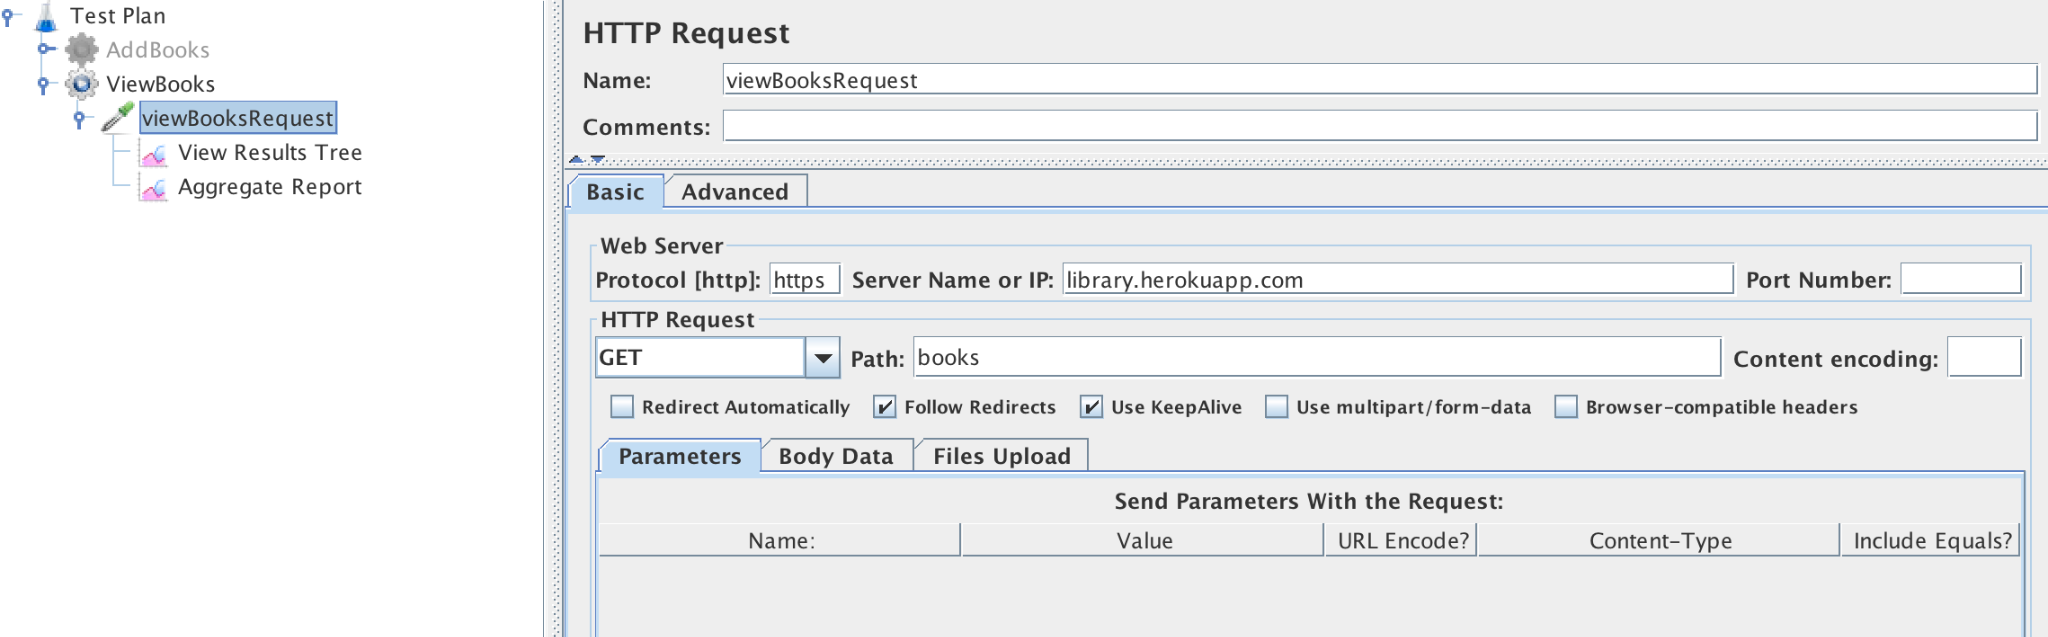 ViewBooks HTTP Request configuration